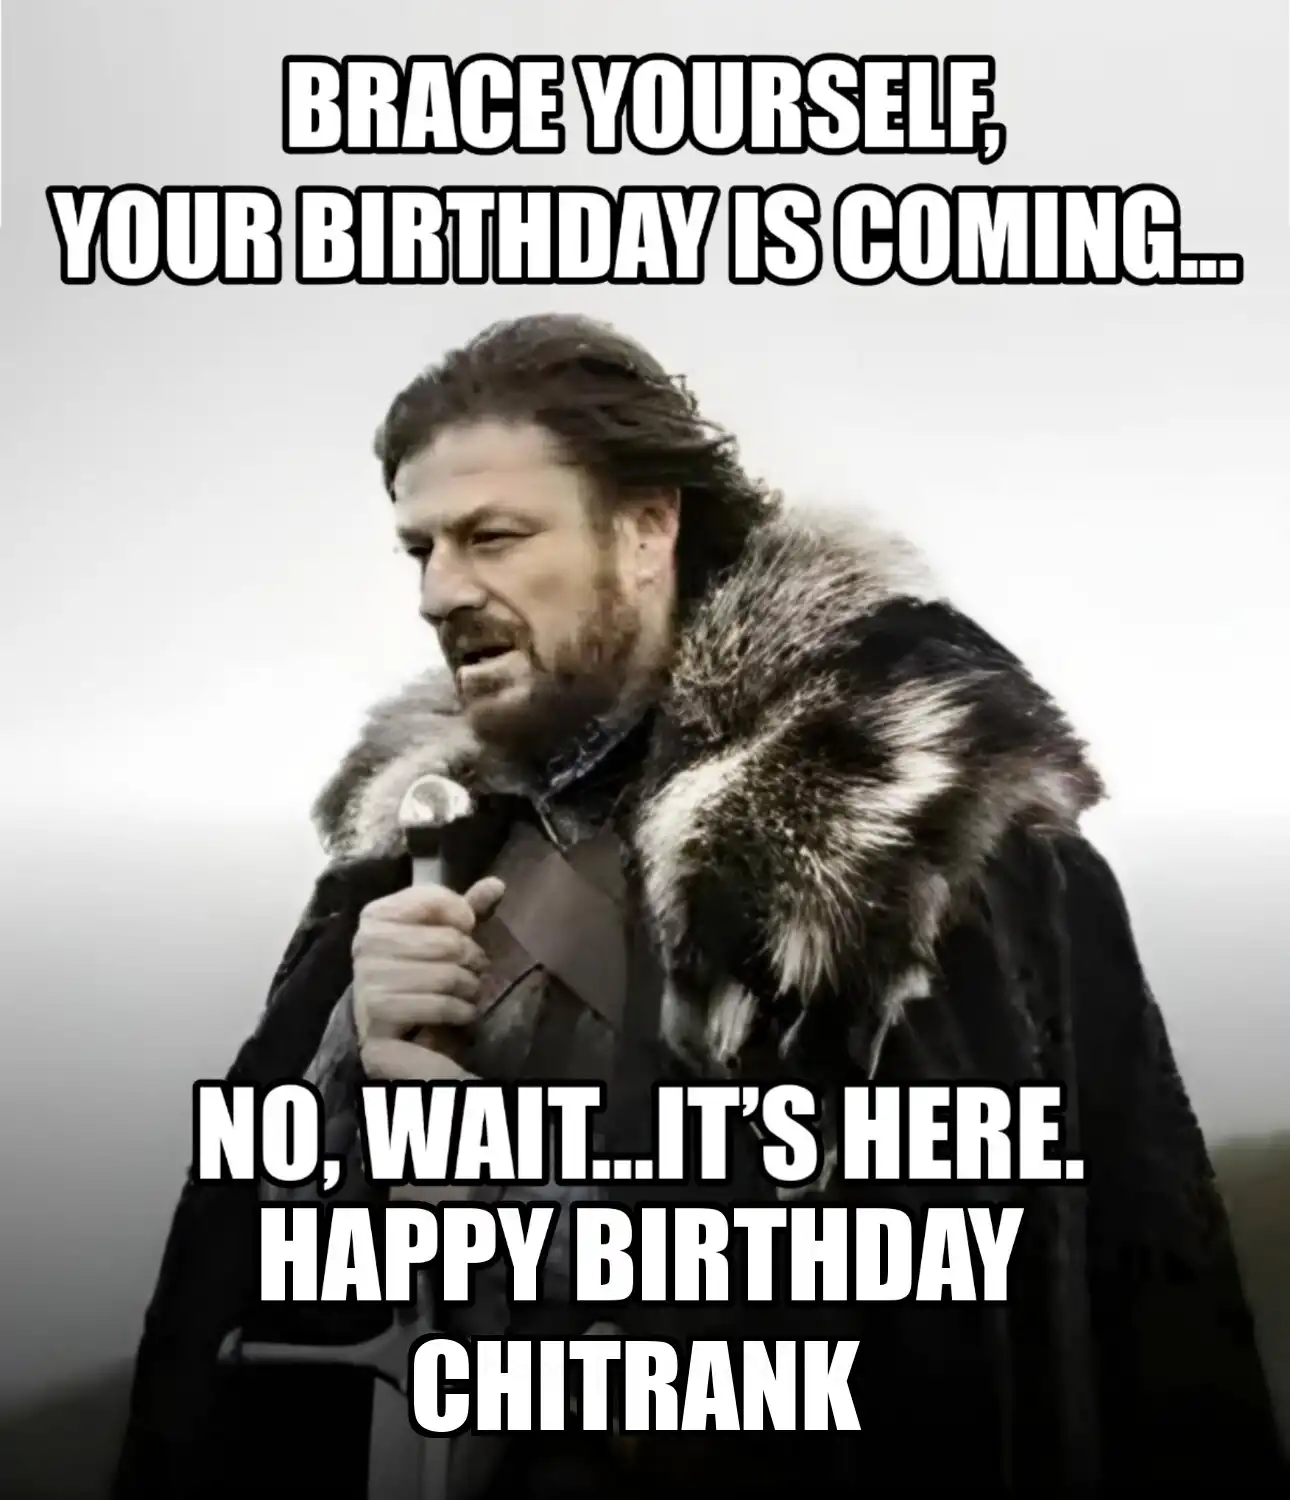 Happy Birthday Chitrank Brace Yourself Your Birthday Is Coming Meme